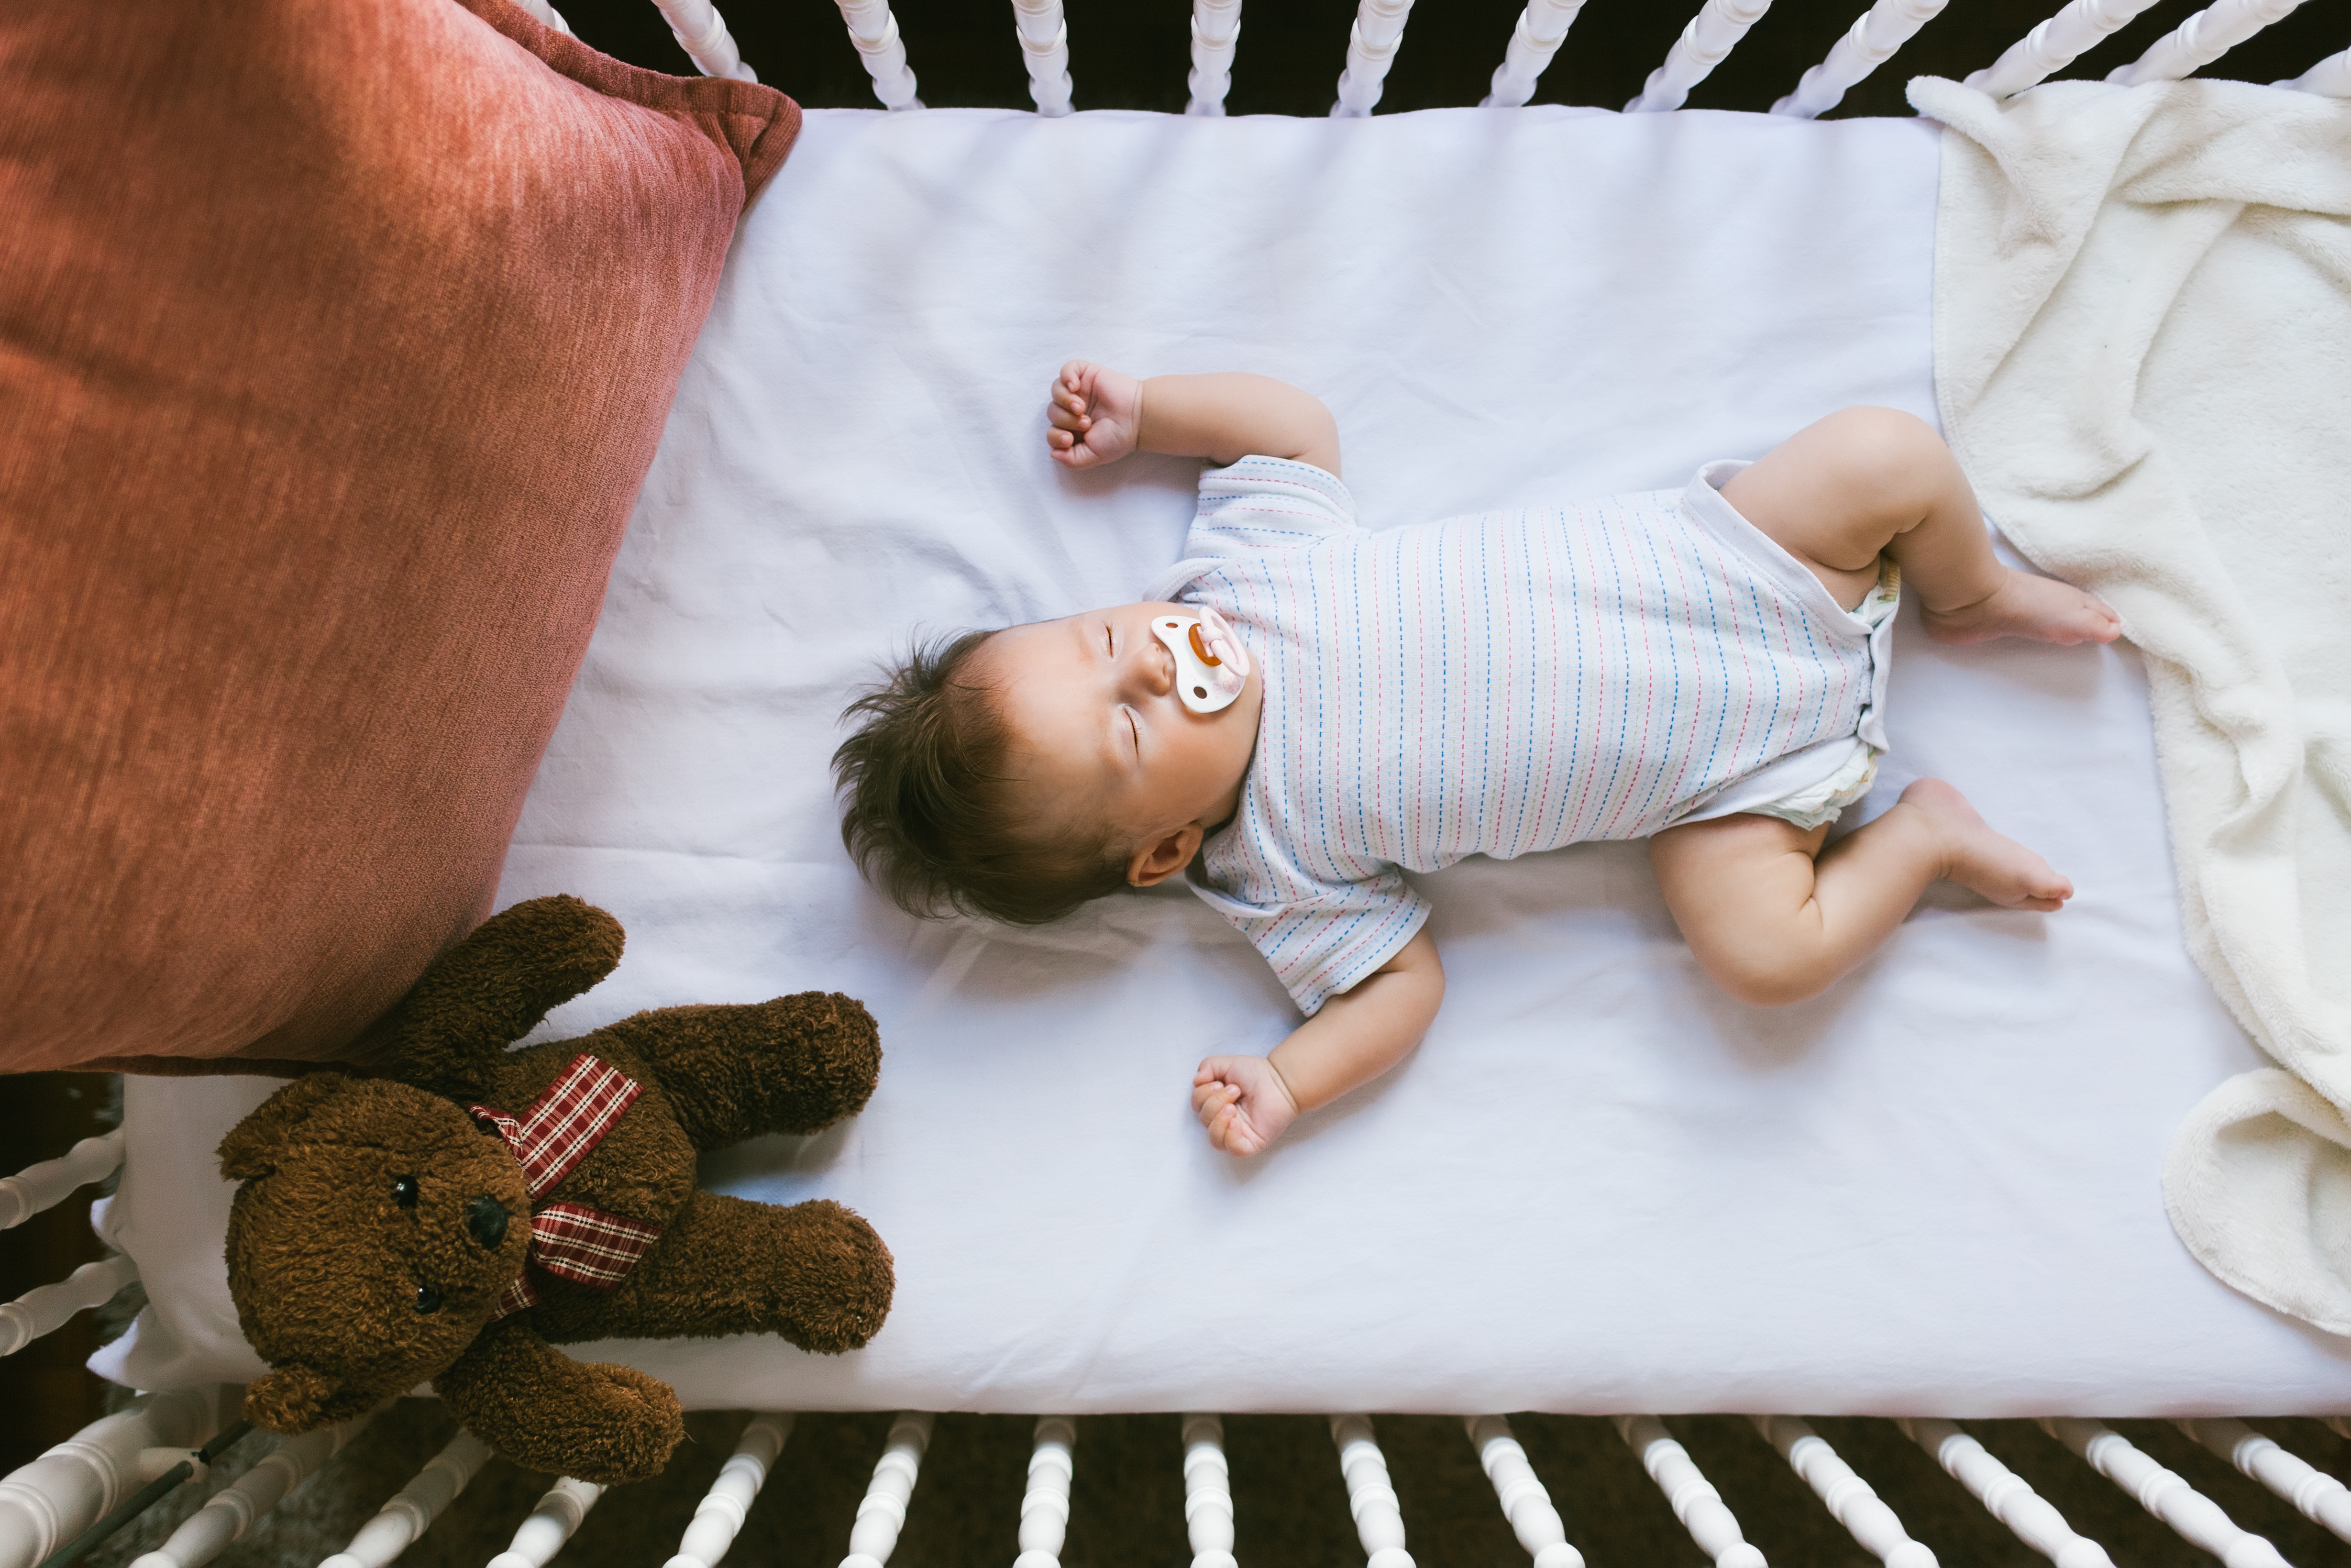 Newborn baby sleeping in a crib | Source: Shutterstock